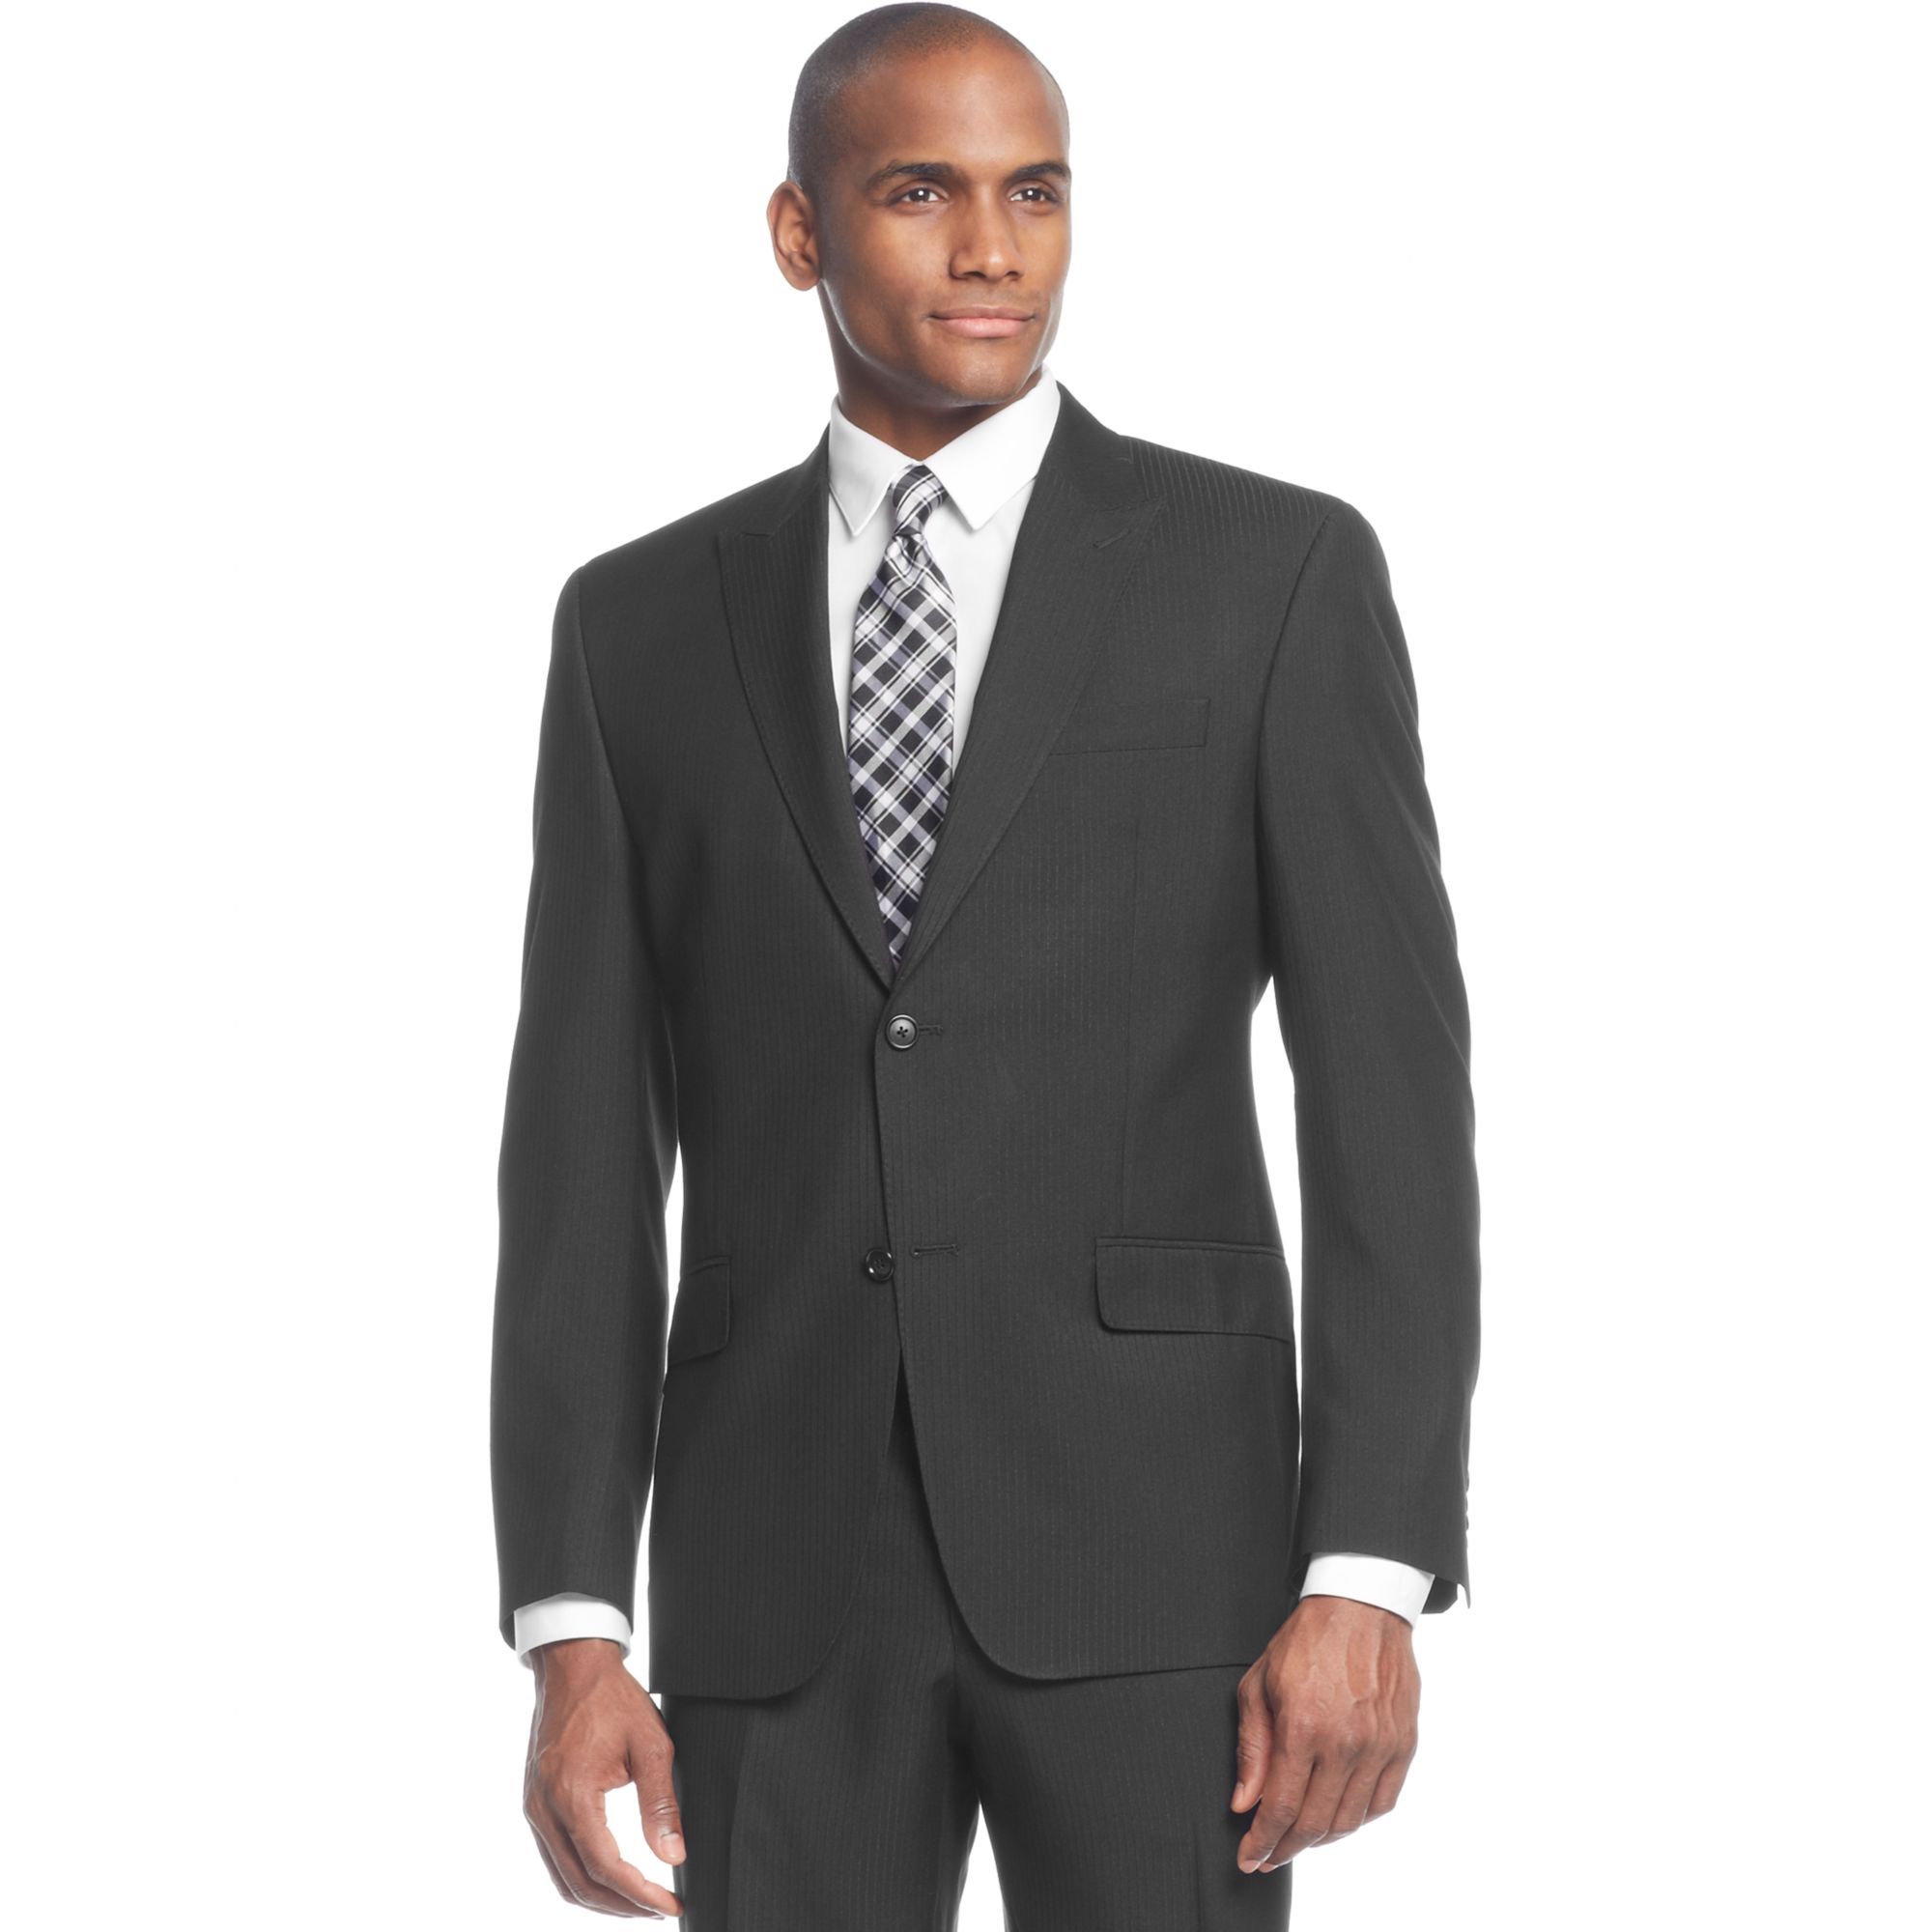 Lyst - Sean john Black Tonal Stripe Suit in Black for Men